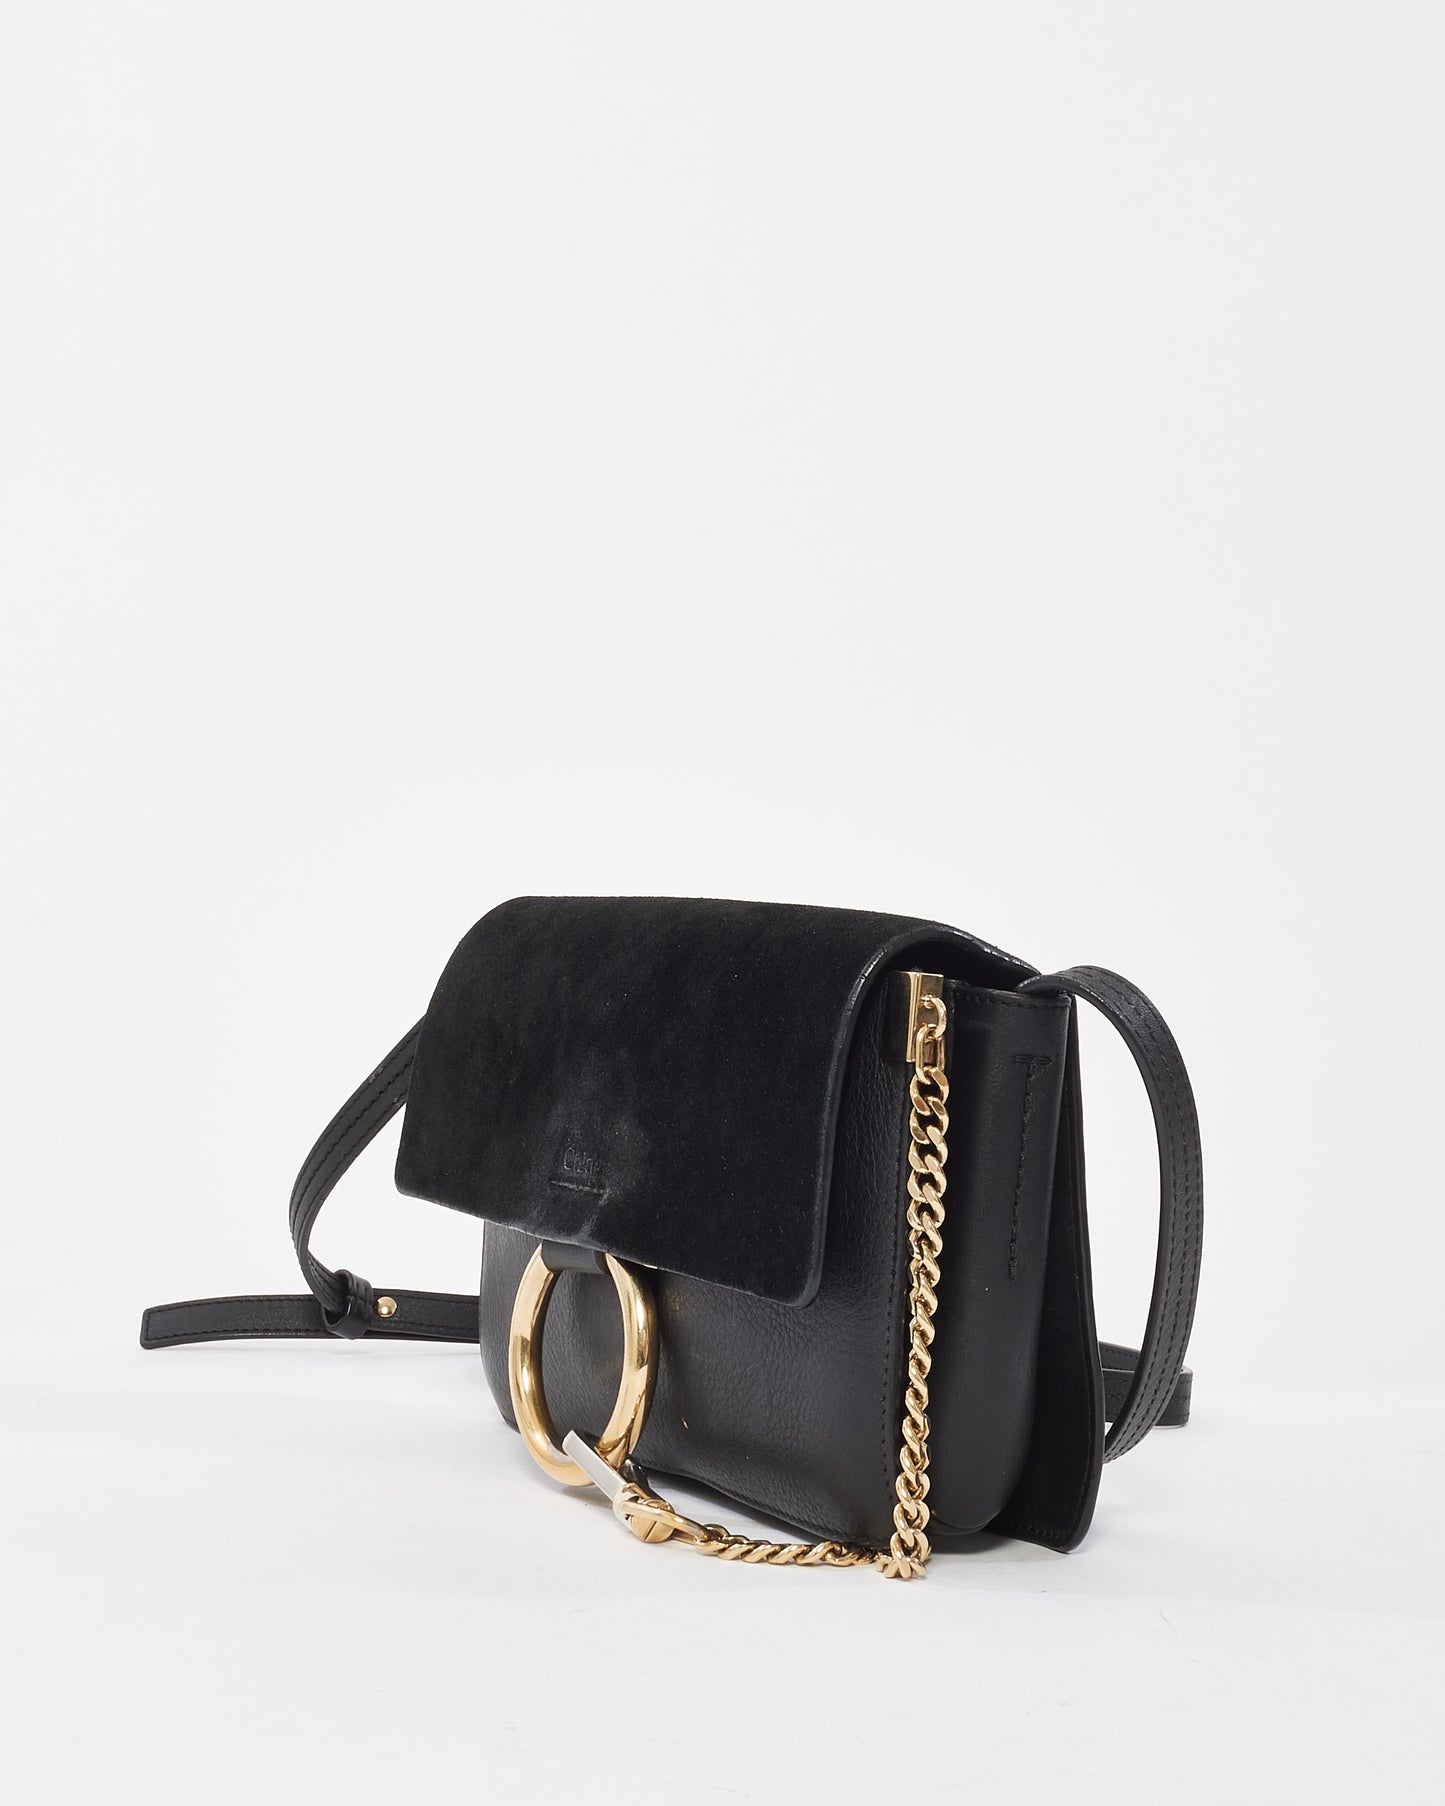 Chloé Black Suede & Leather Faye Crossbody Bag